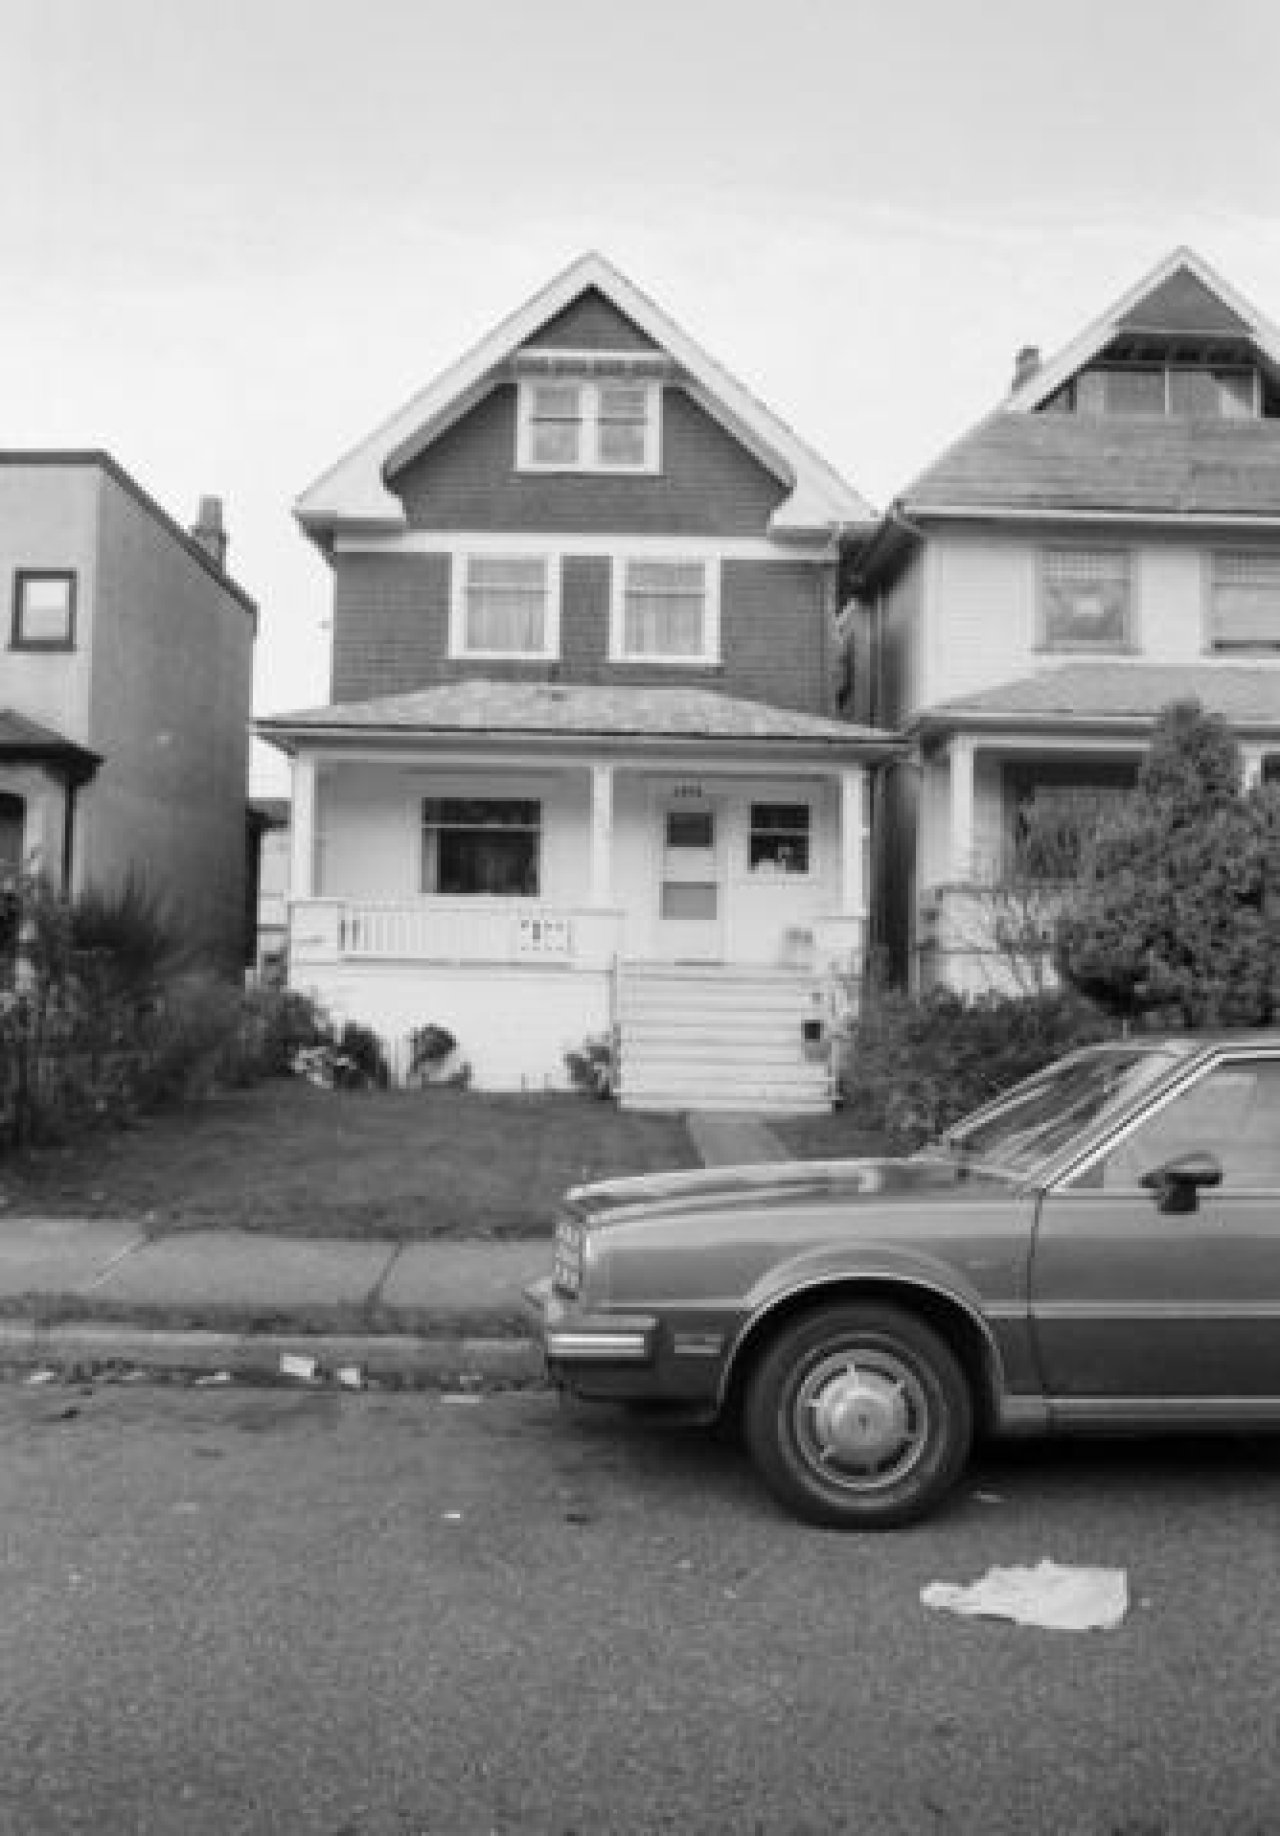 1975 West 1st Avenue c. 1985. Source: City of Vancouver Archives 790-1526